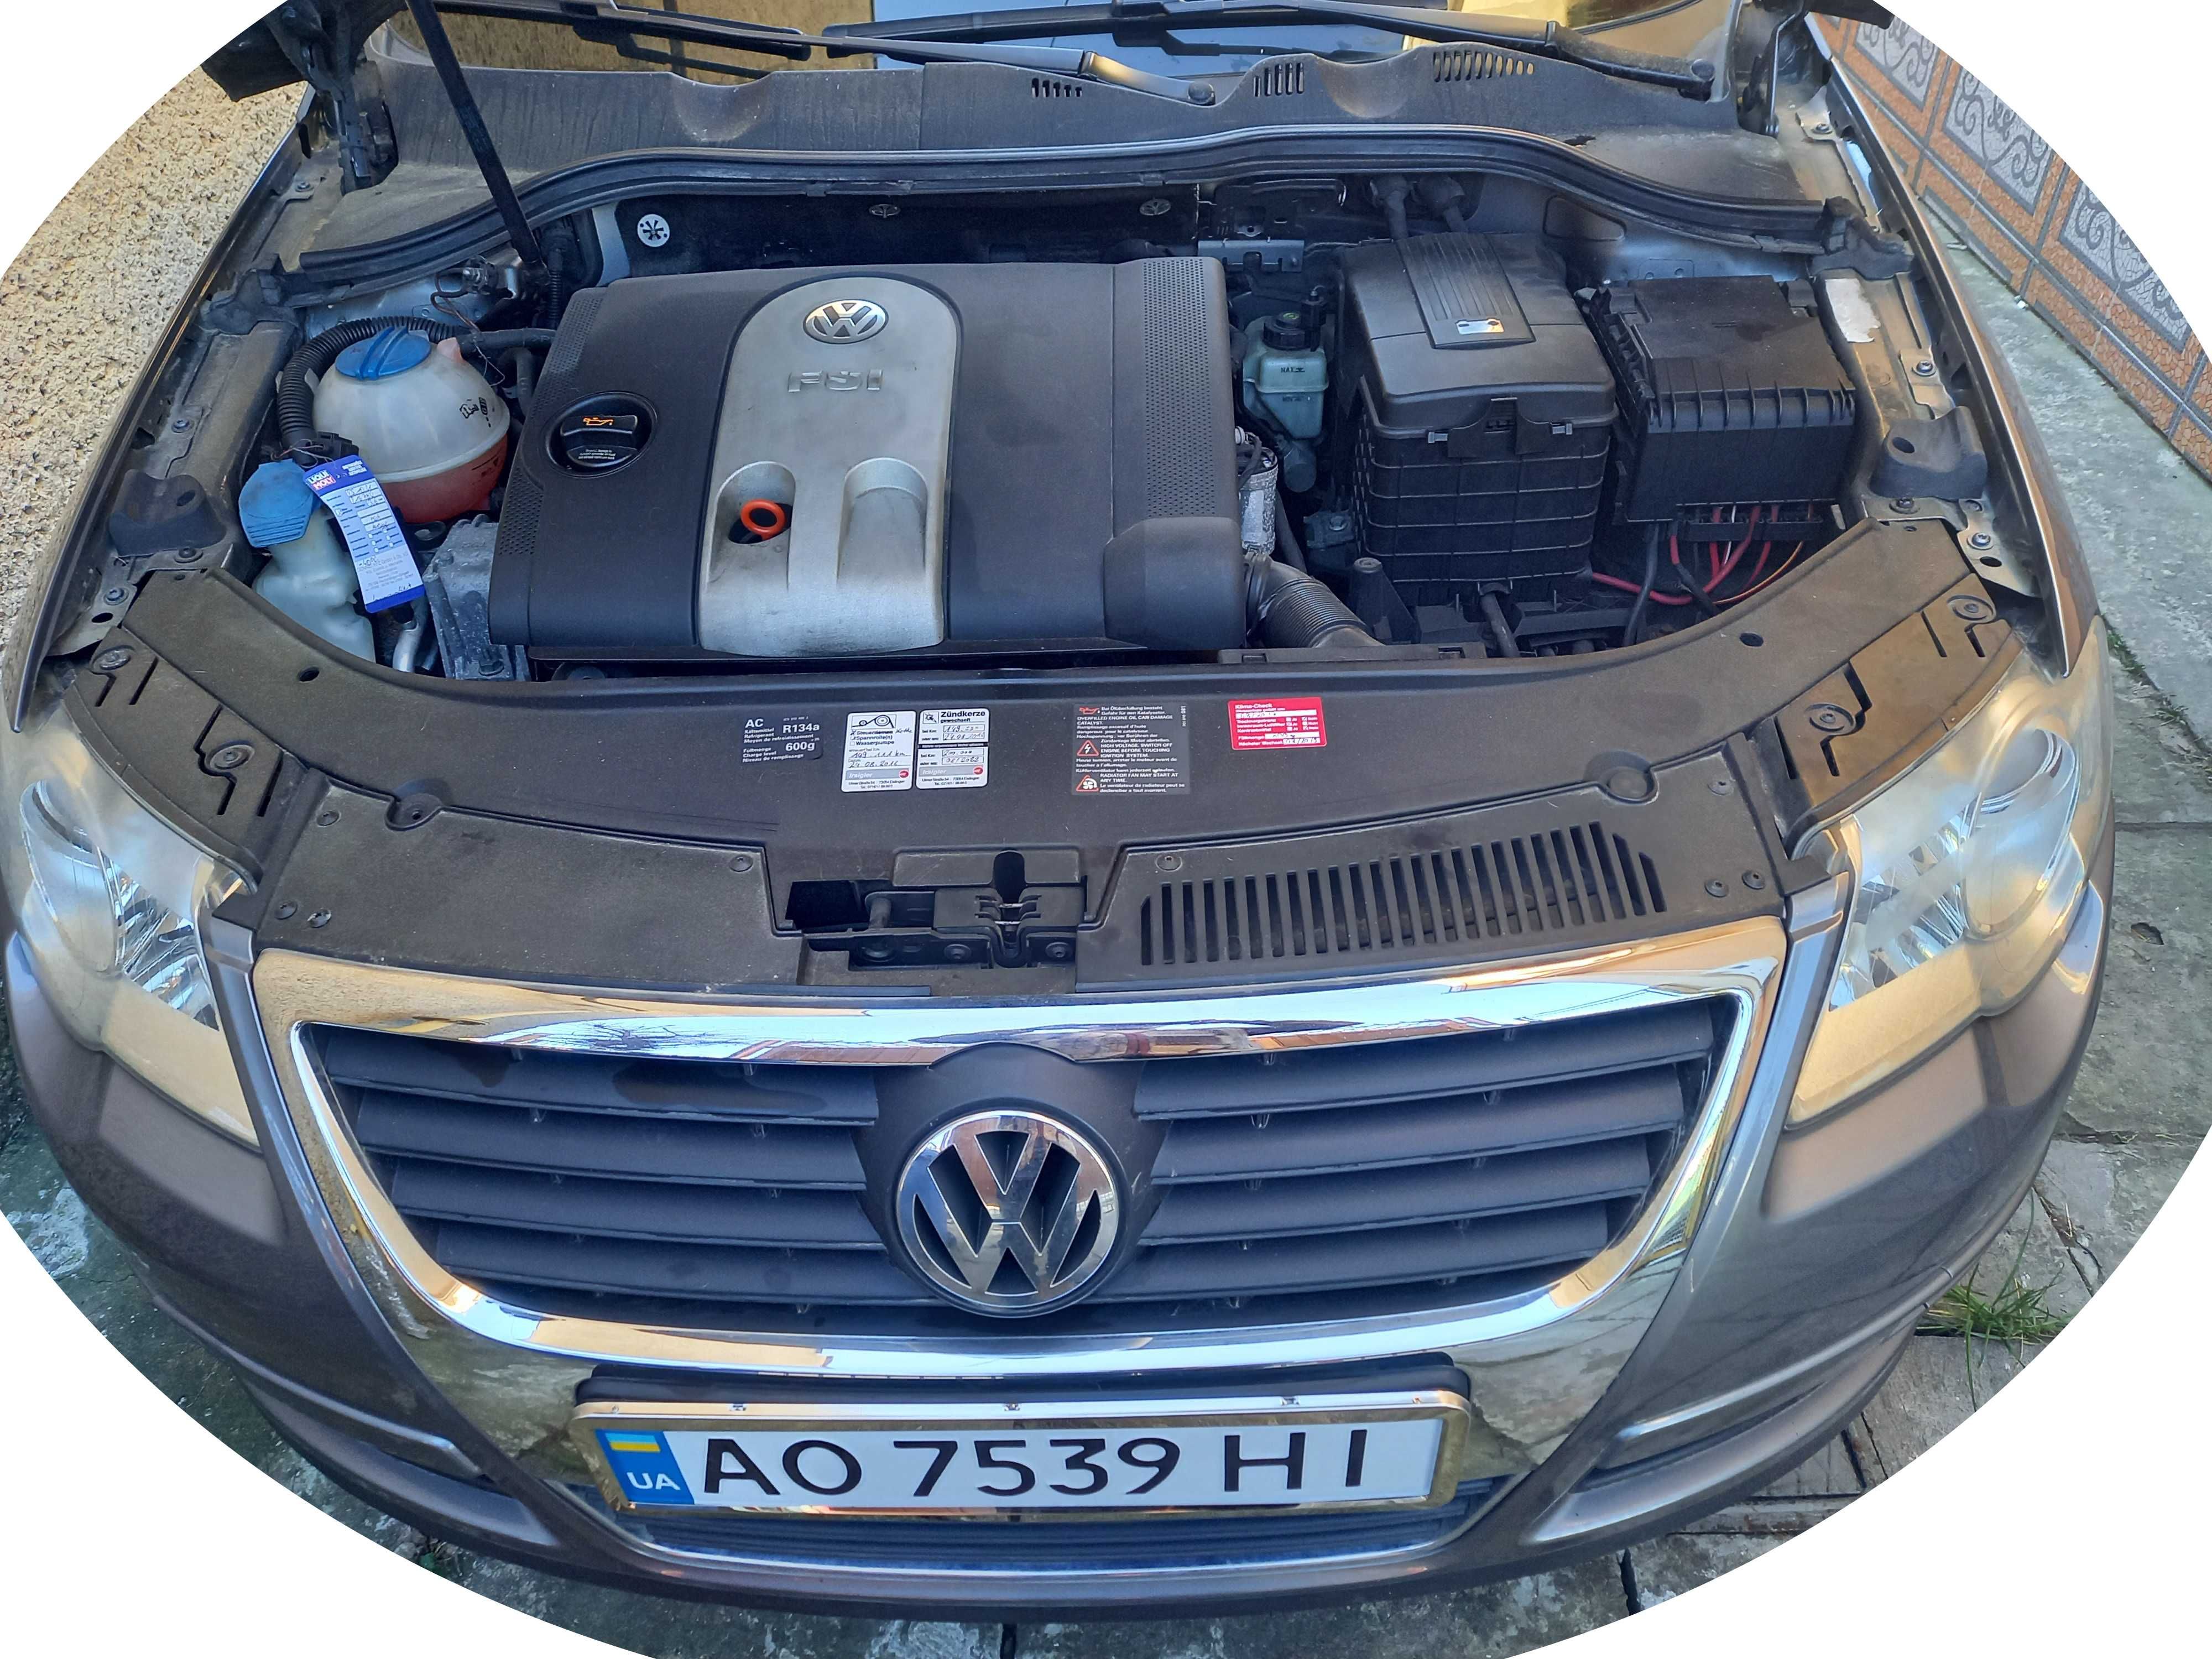 Volkswagen Passat B6 2006 автомат/бензин